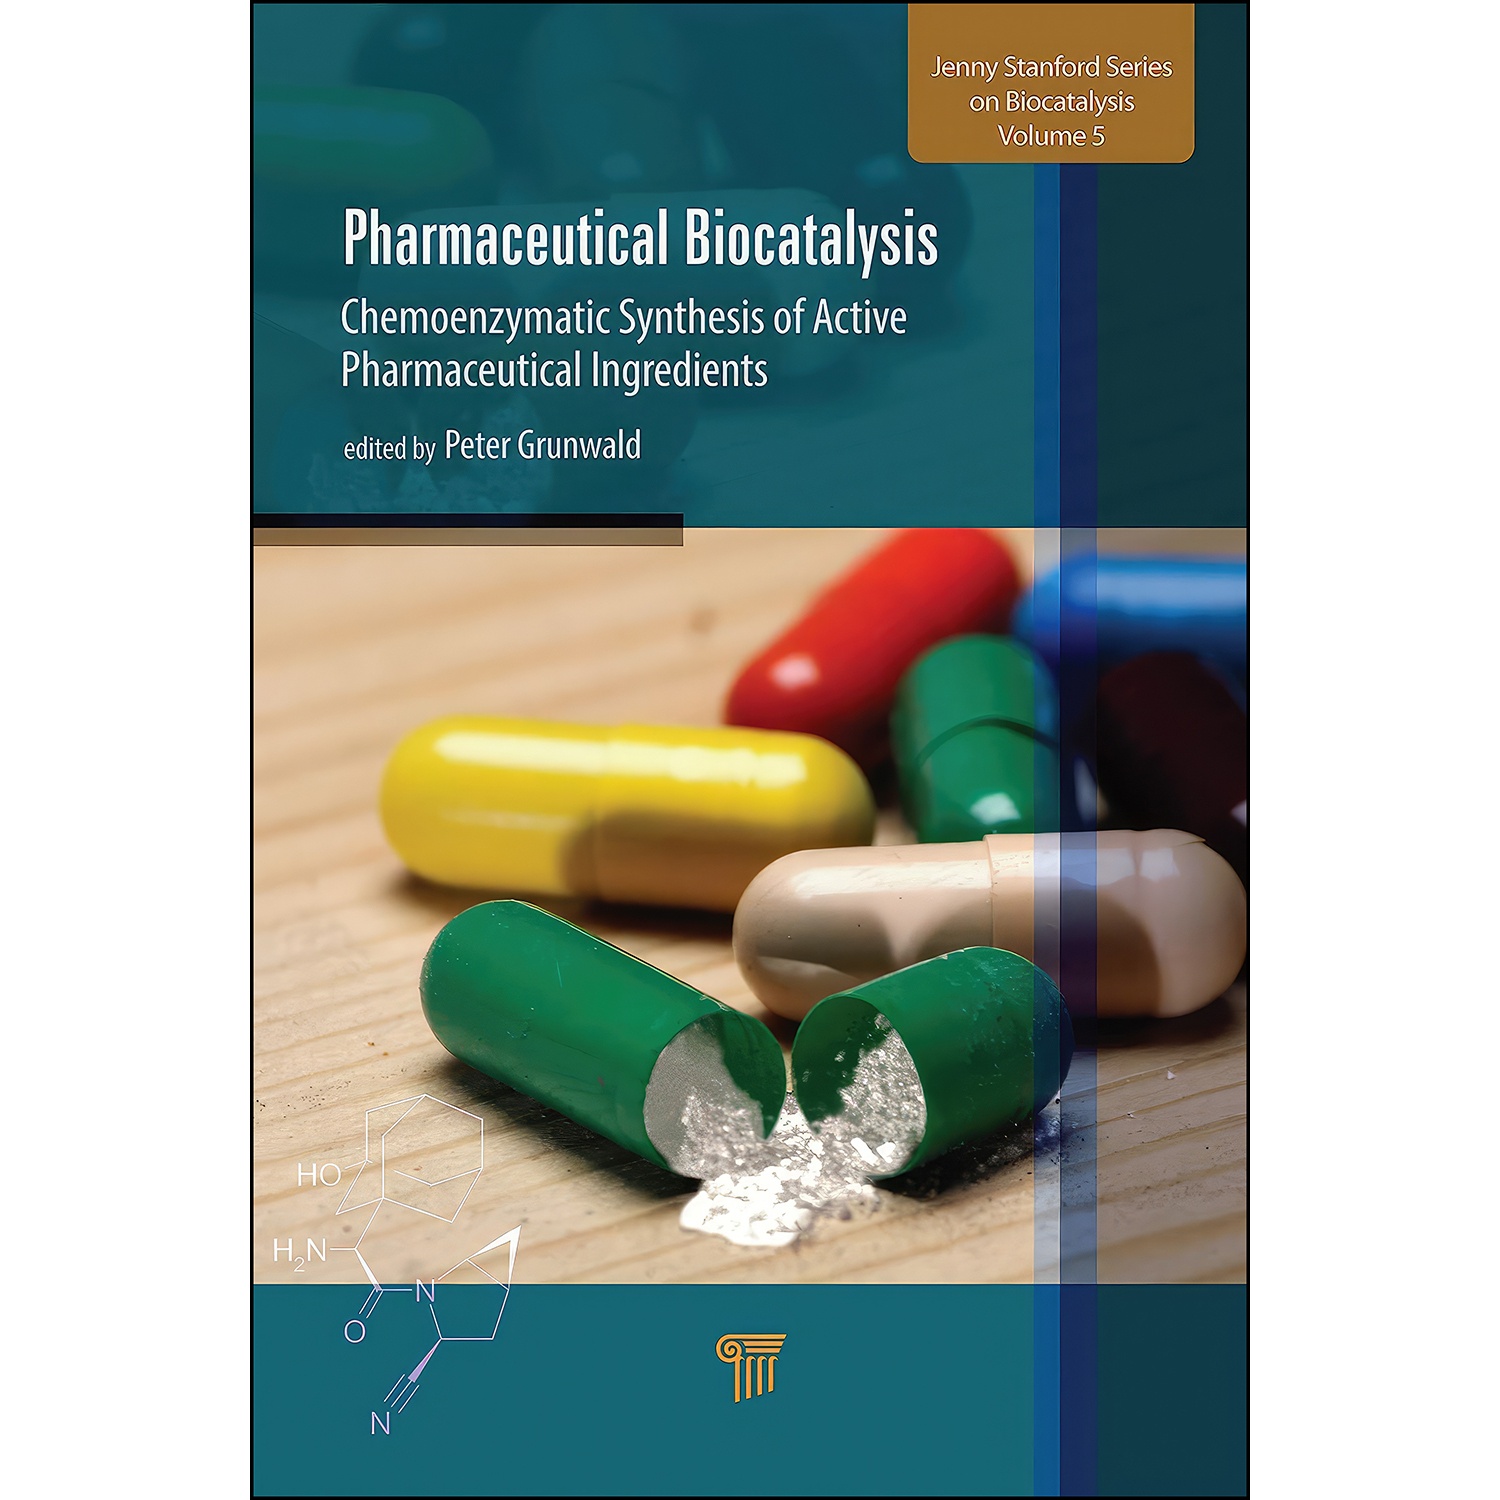 کتاب Pharmaceutical Biocatalysis اثر Peter Grunwald انتشارات Jenny Stanford Publishing